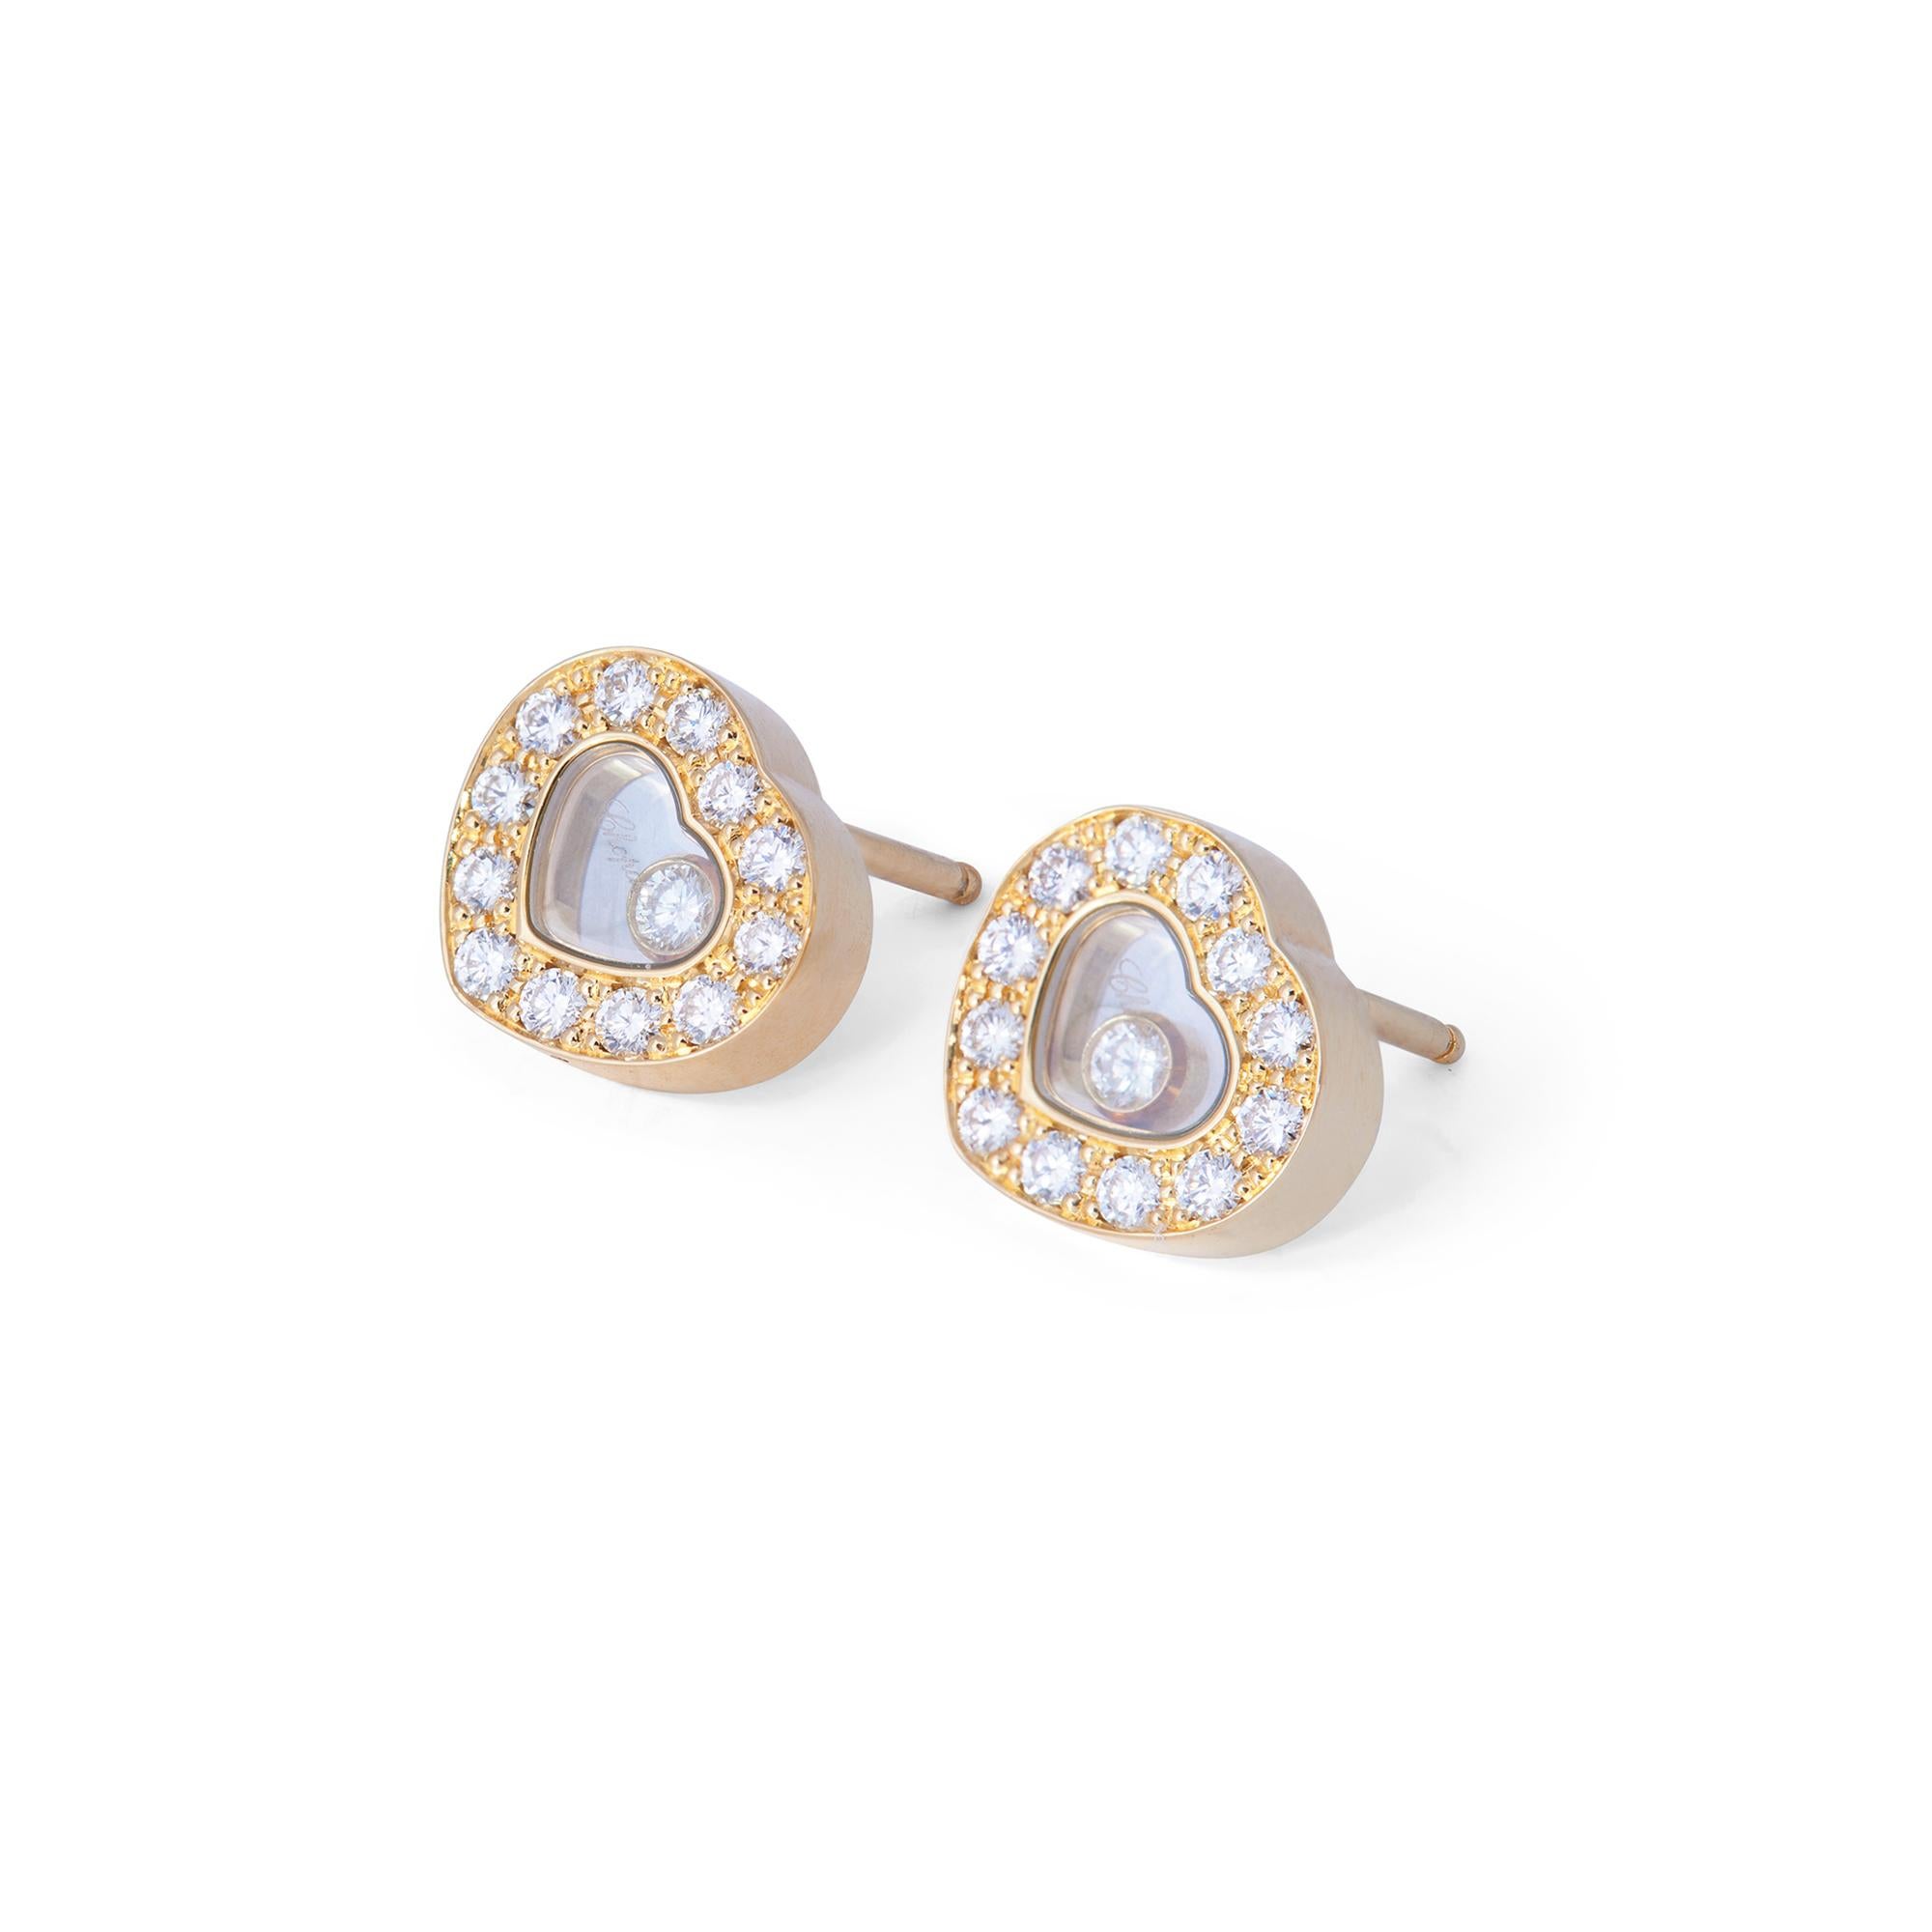 Contemporary Chopard 'Happy Hearts' Yellow Gold Diamond Earrings